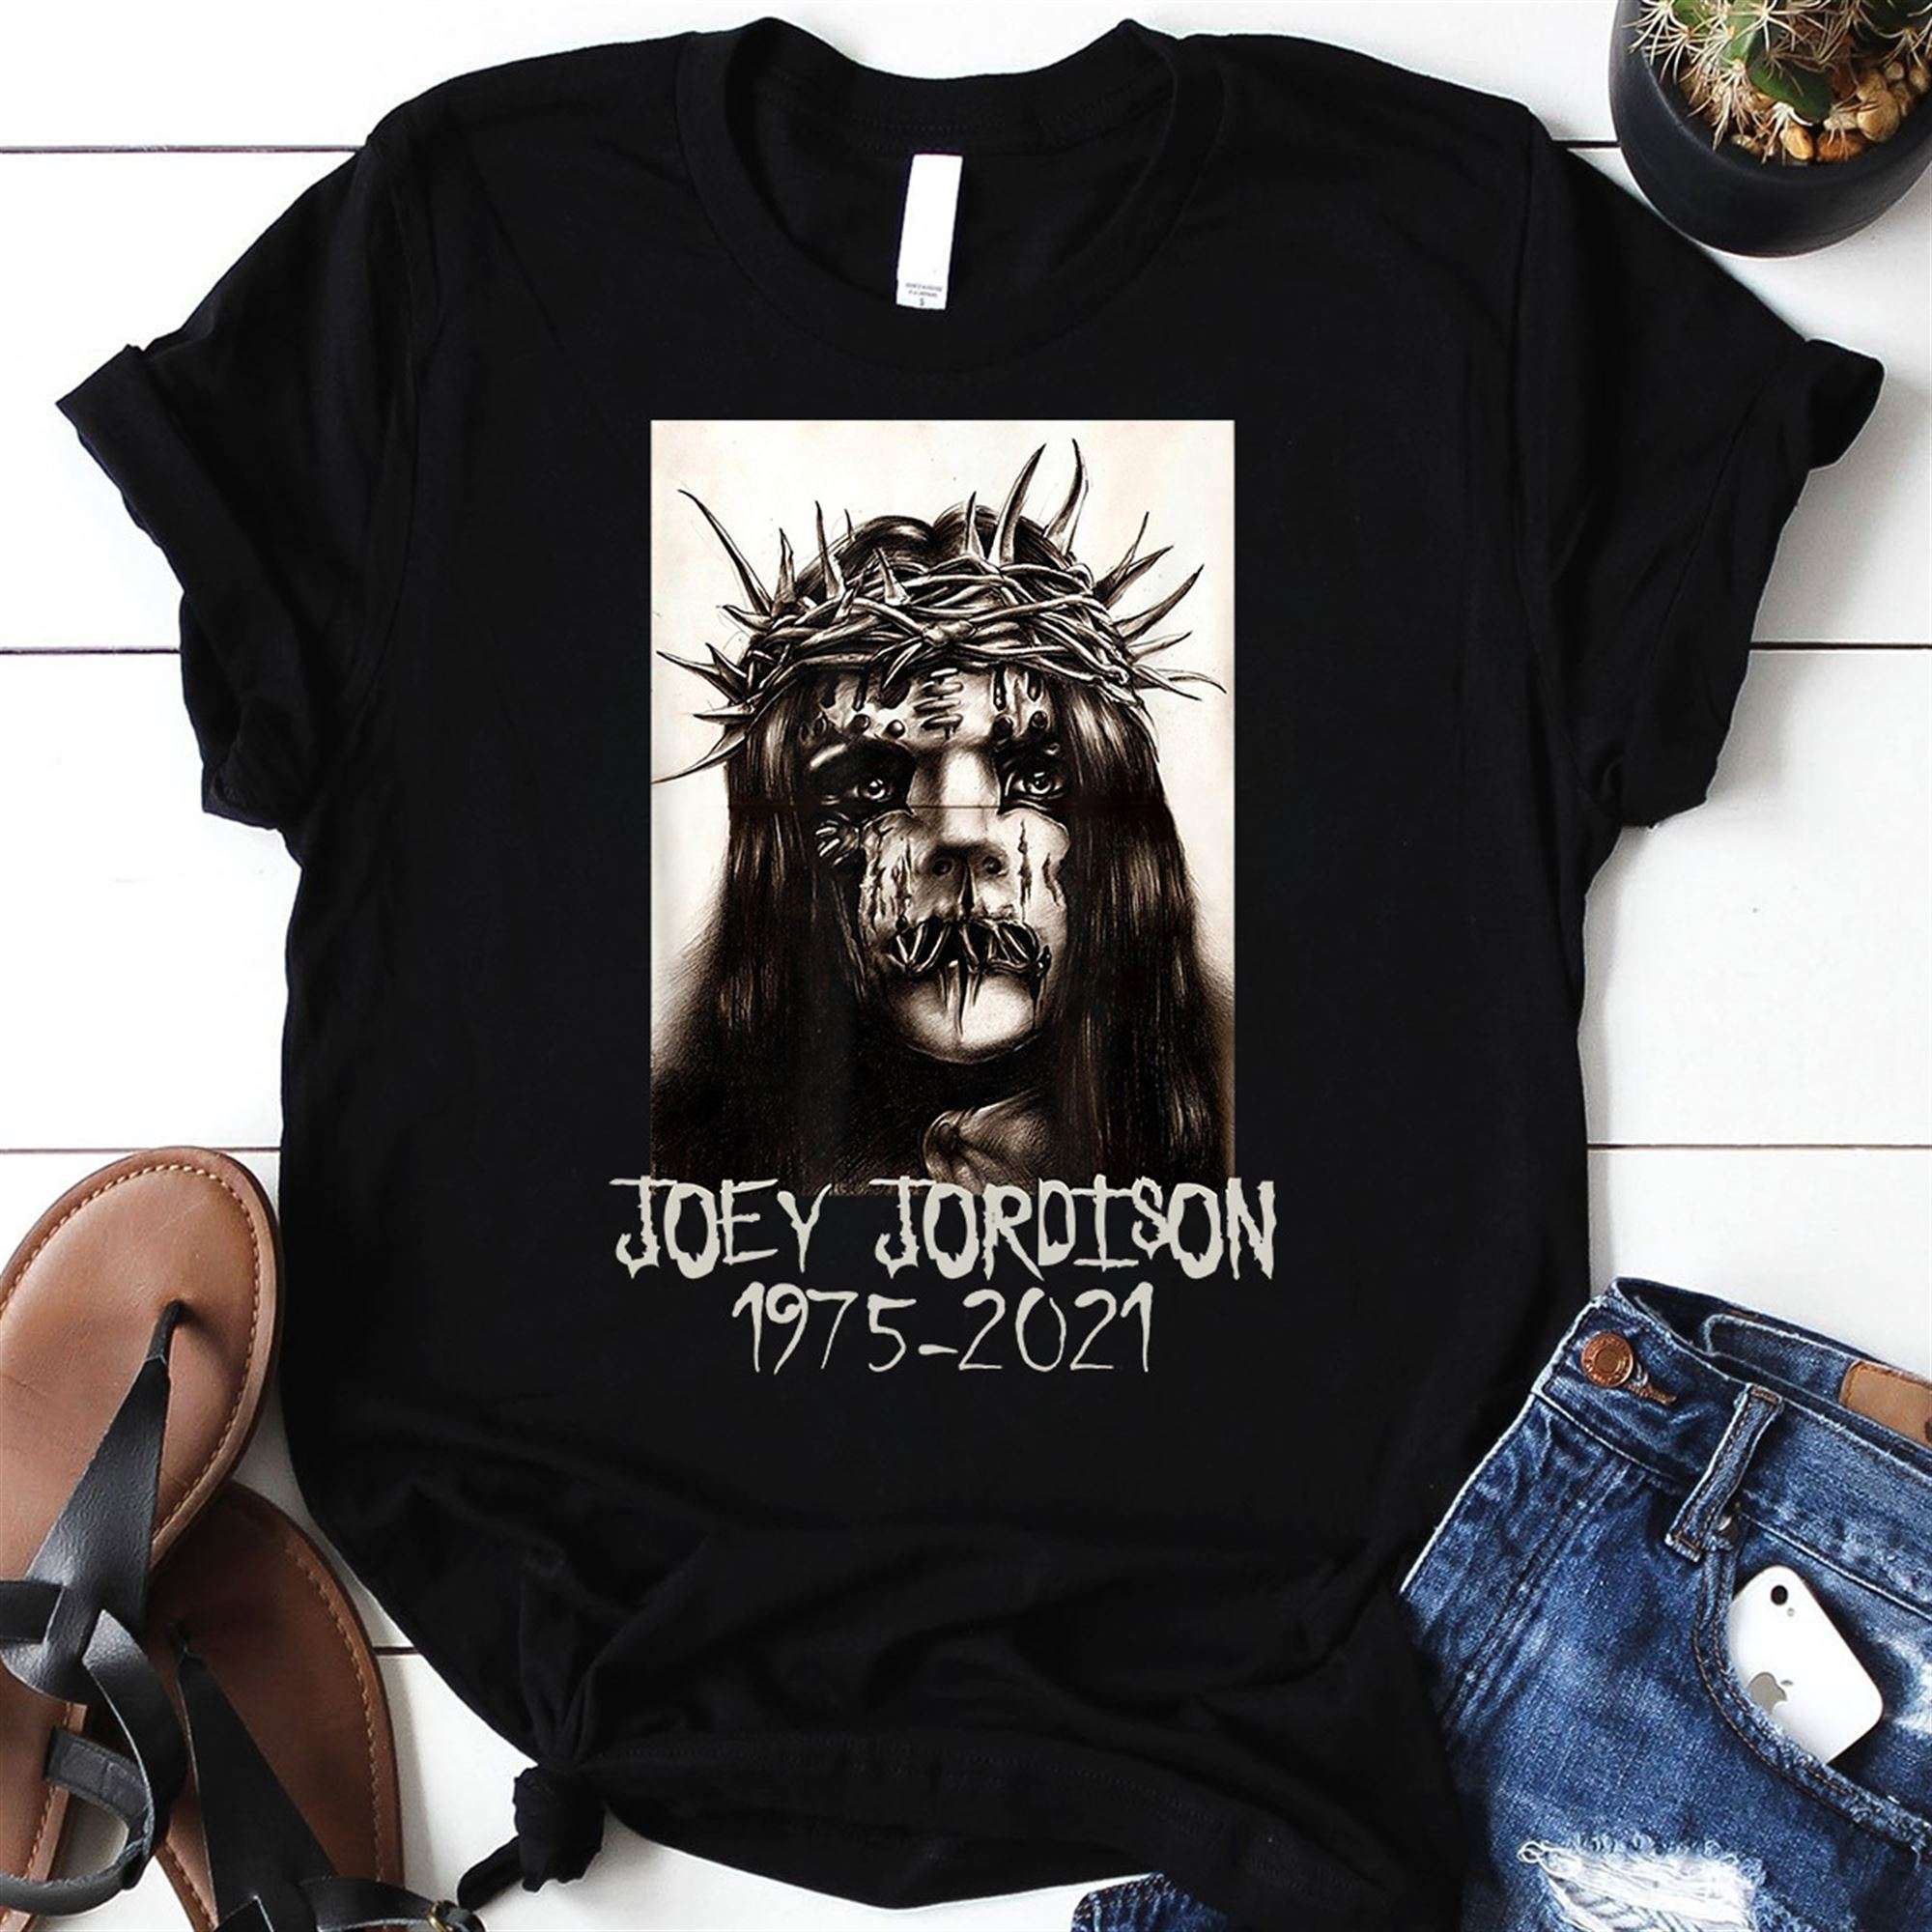 Rip Joey Jordison 1975-2021 Unisex T Shirt Full Size Up To 5xl